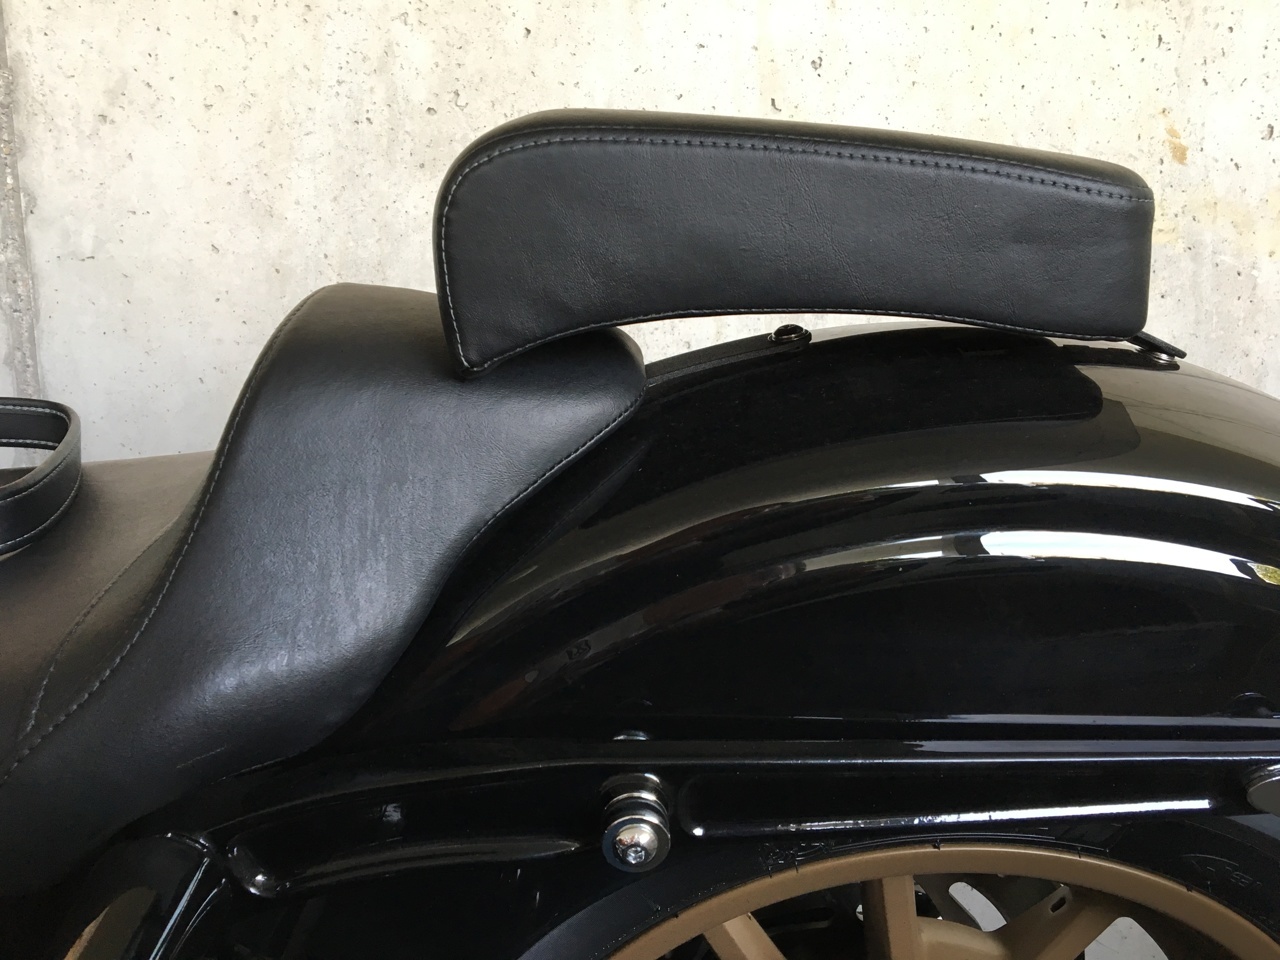 Sozius Saugnapf Sitz-Pad für Harley Dyna Low Rider S Notsitz Diamond schwarz 